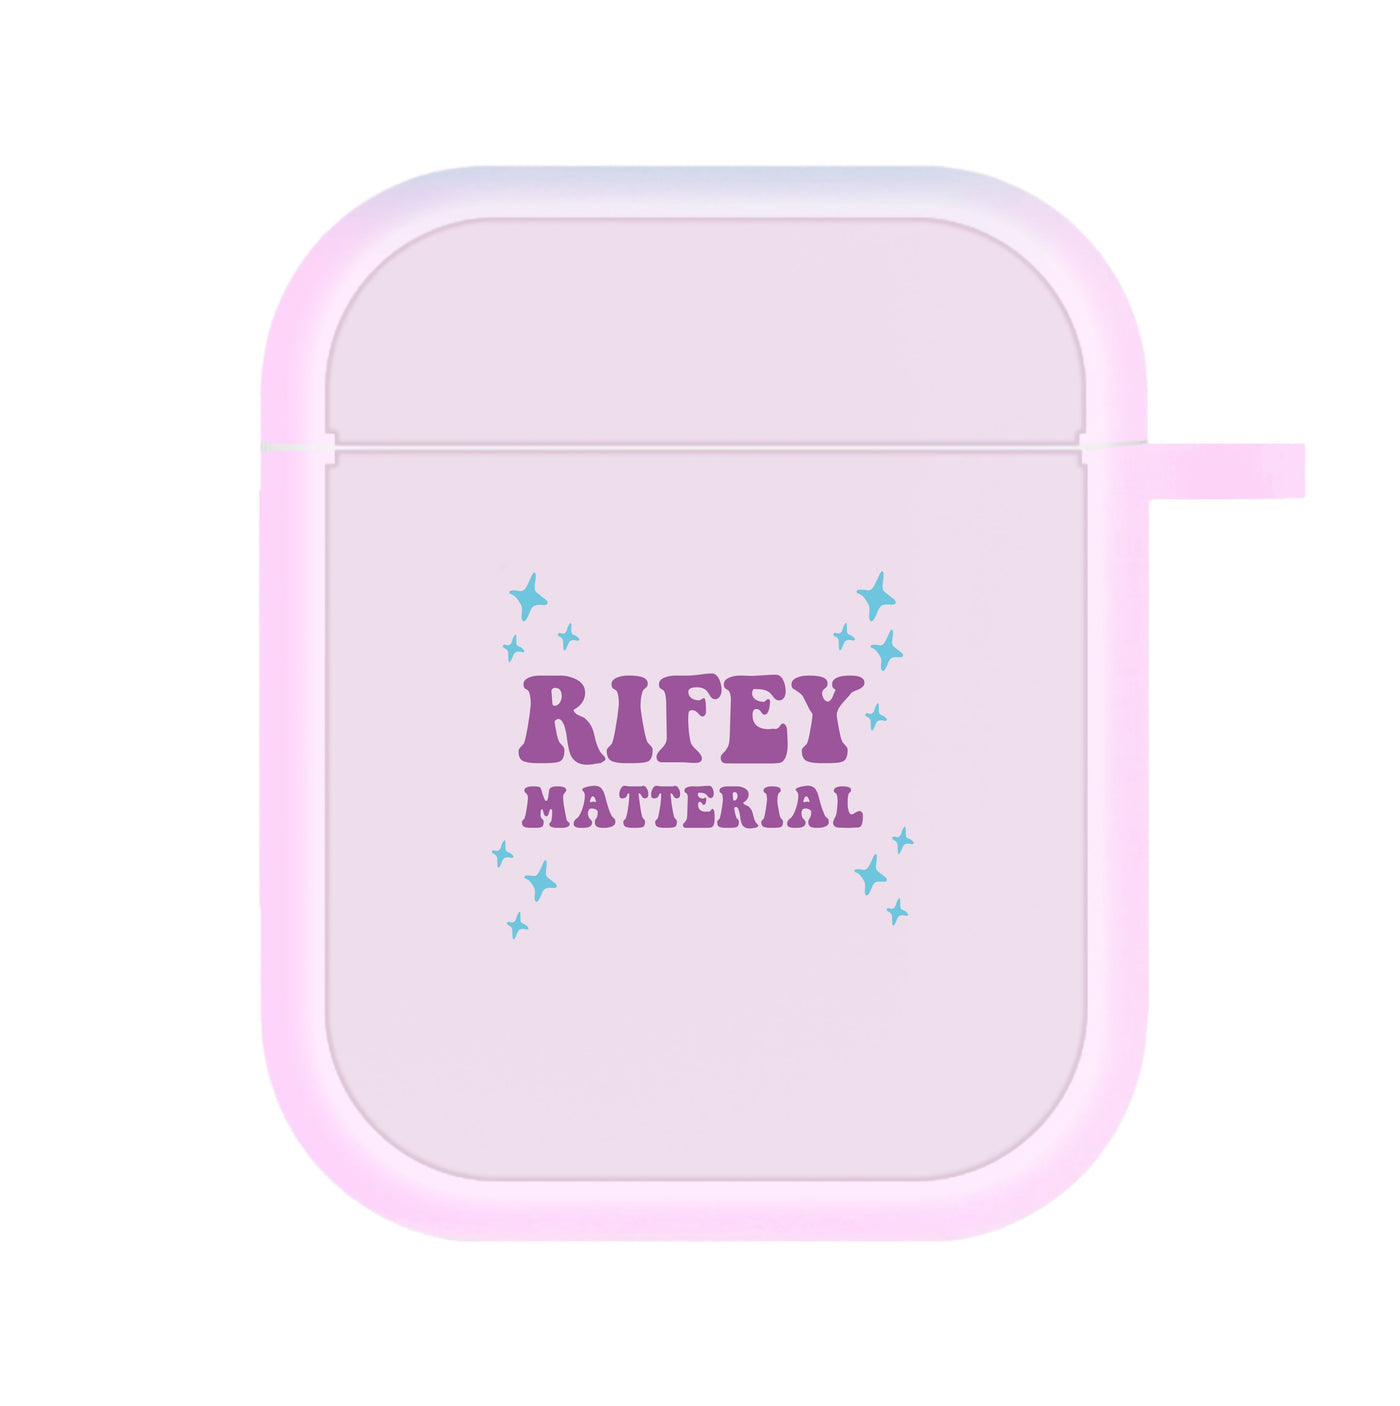 Rifey Material - Matt Rife AirPods Case